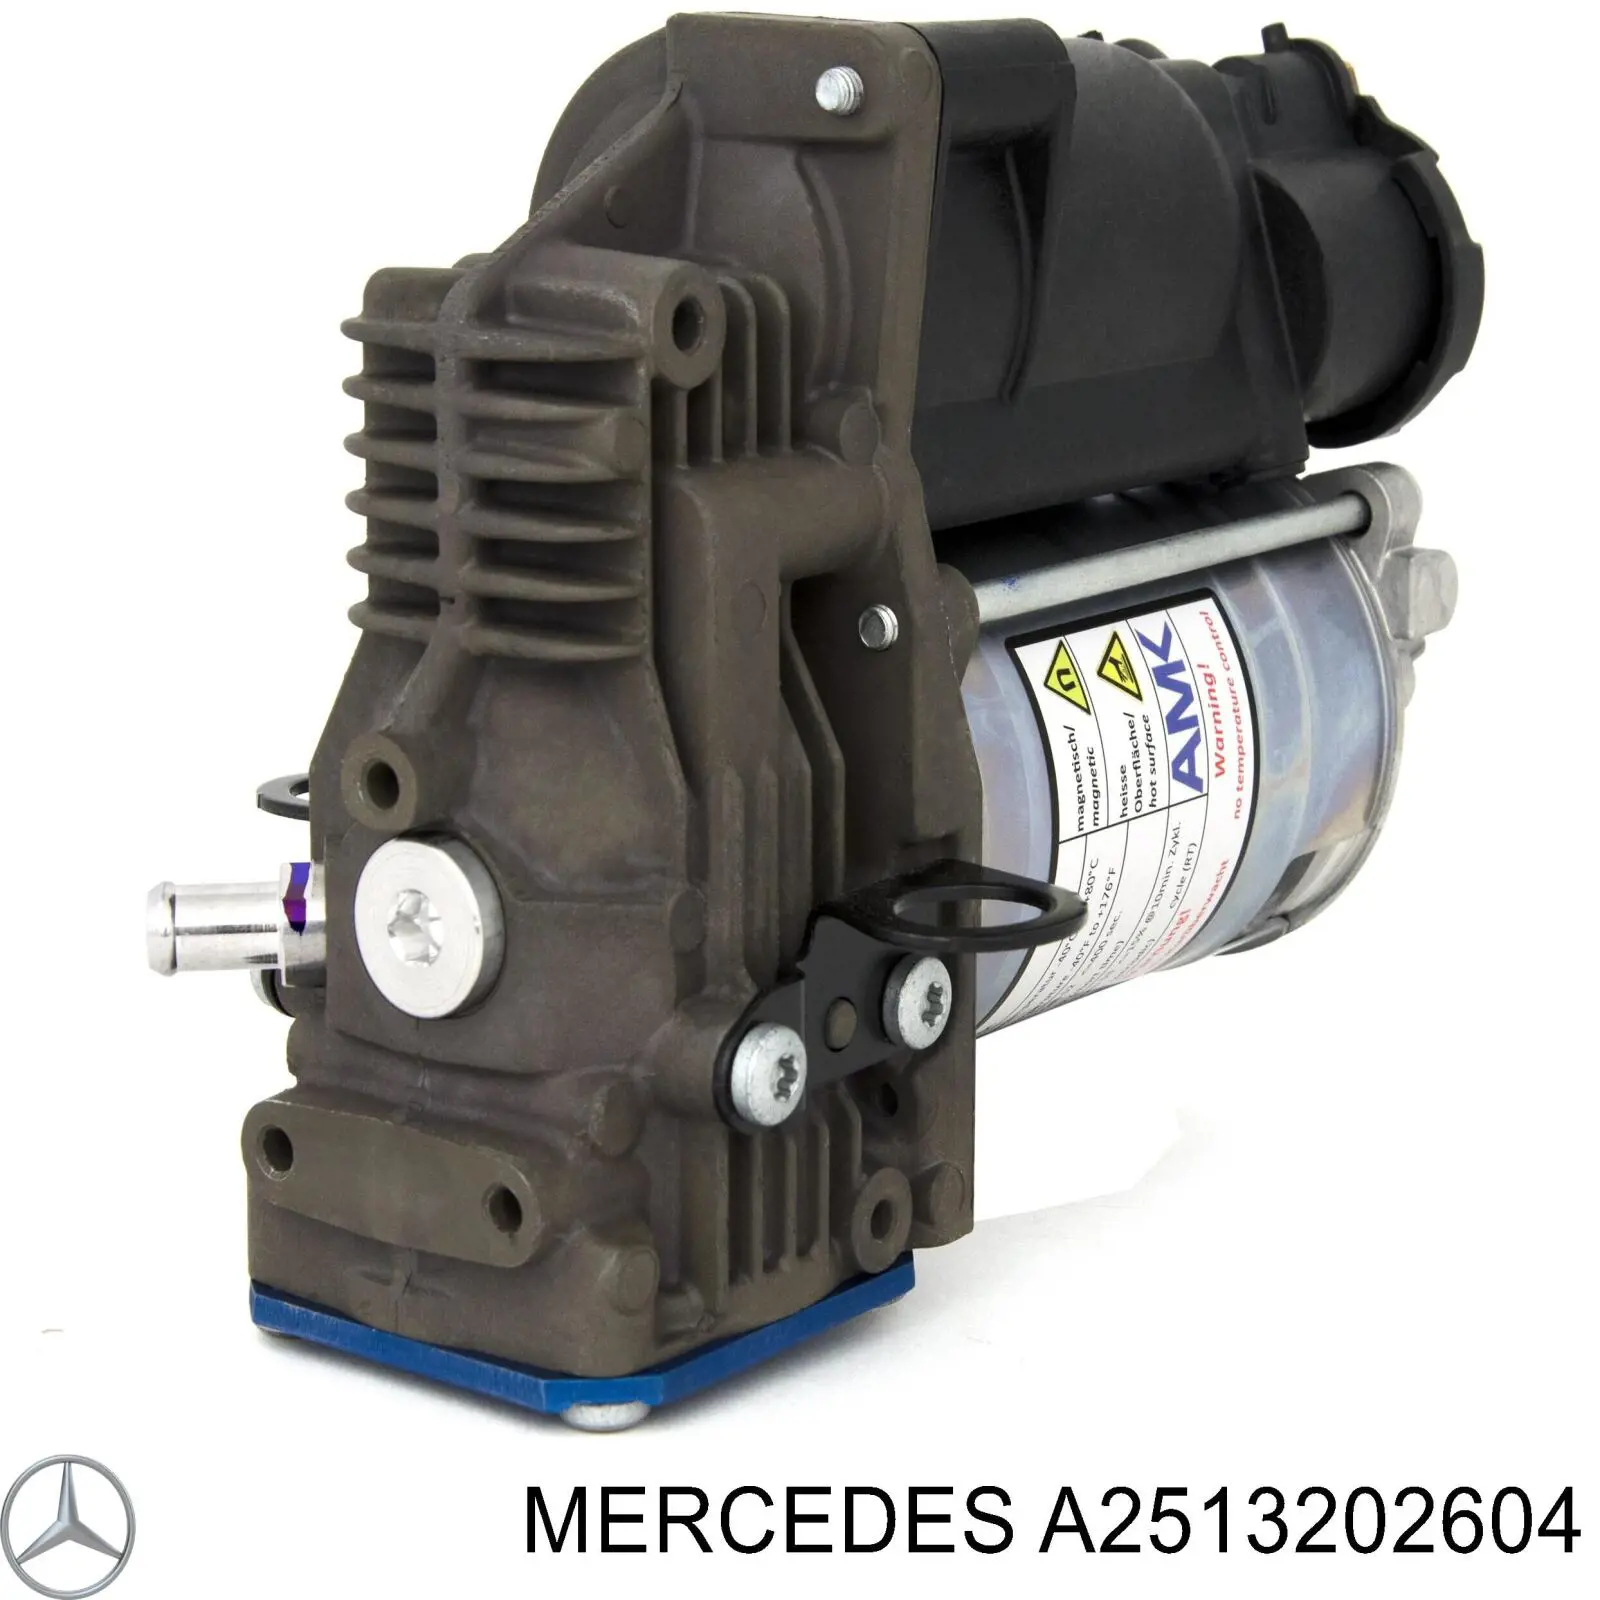 251320120428 Mercedes bomba de compresor de suspensión neumática